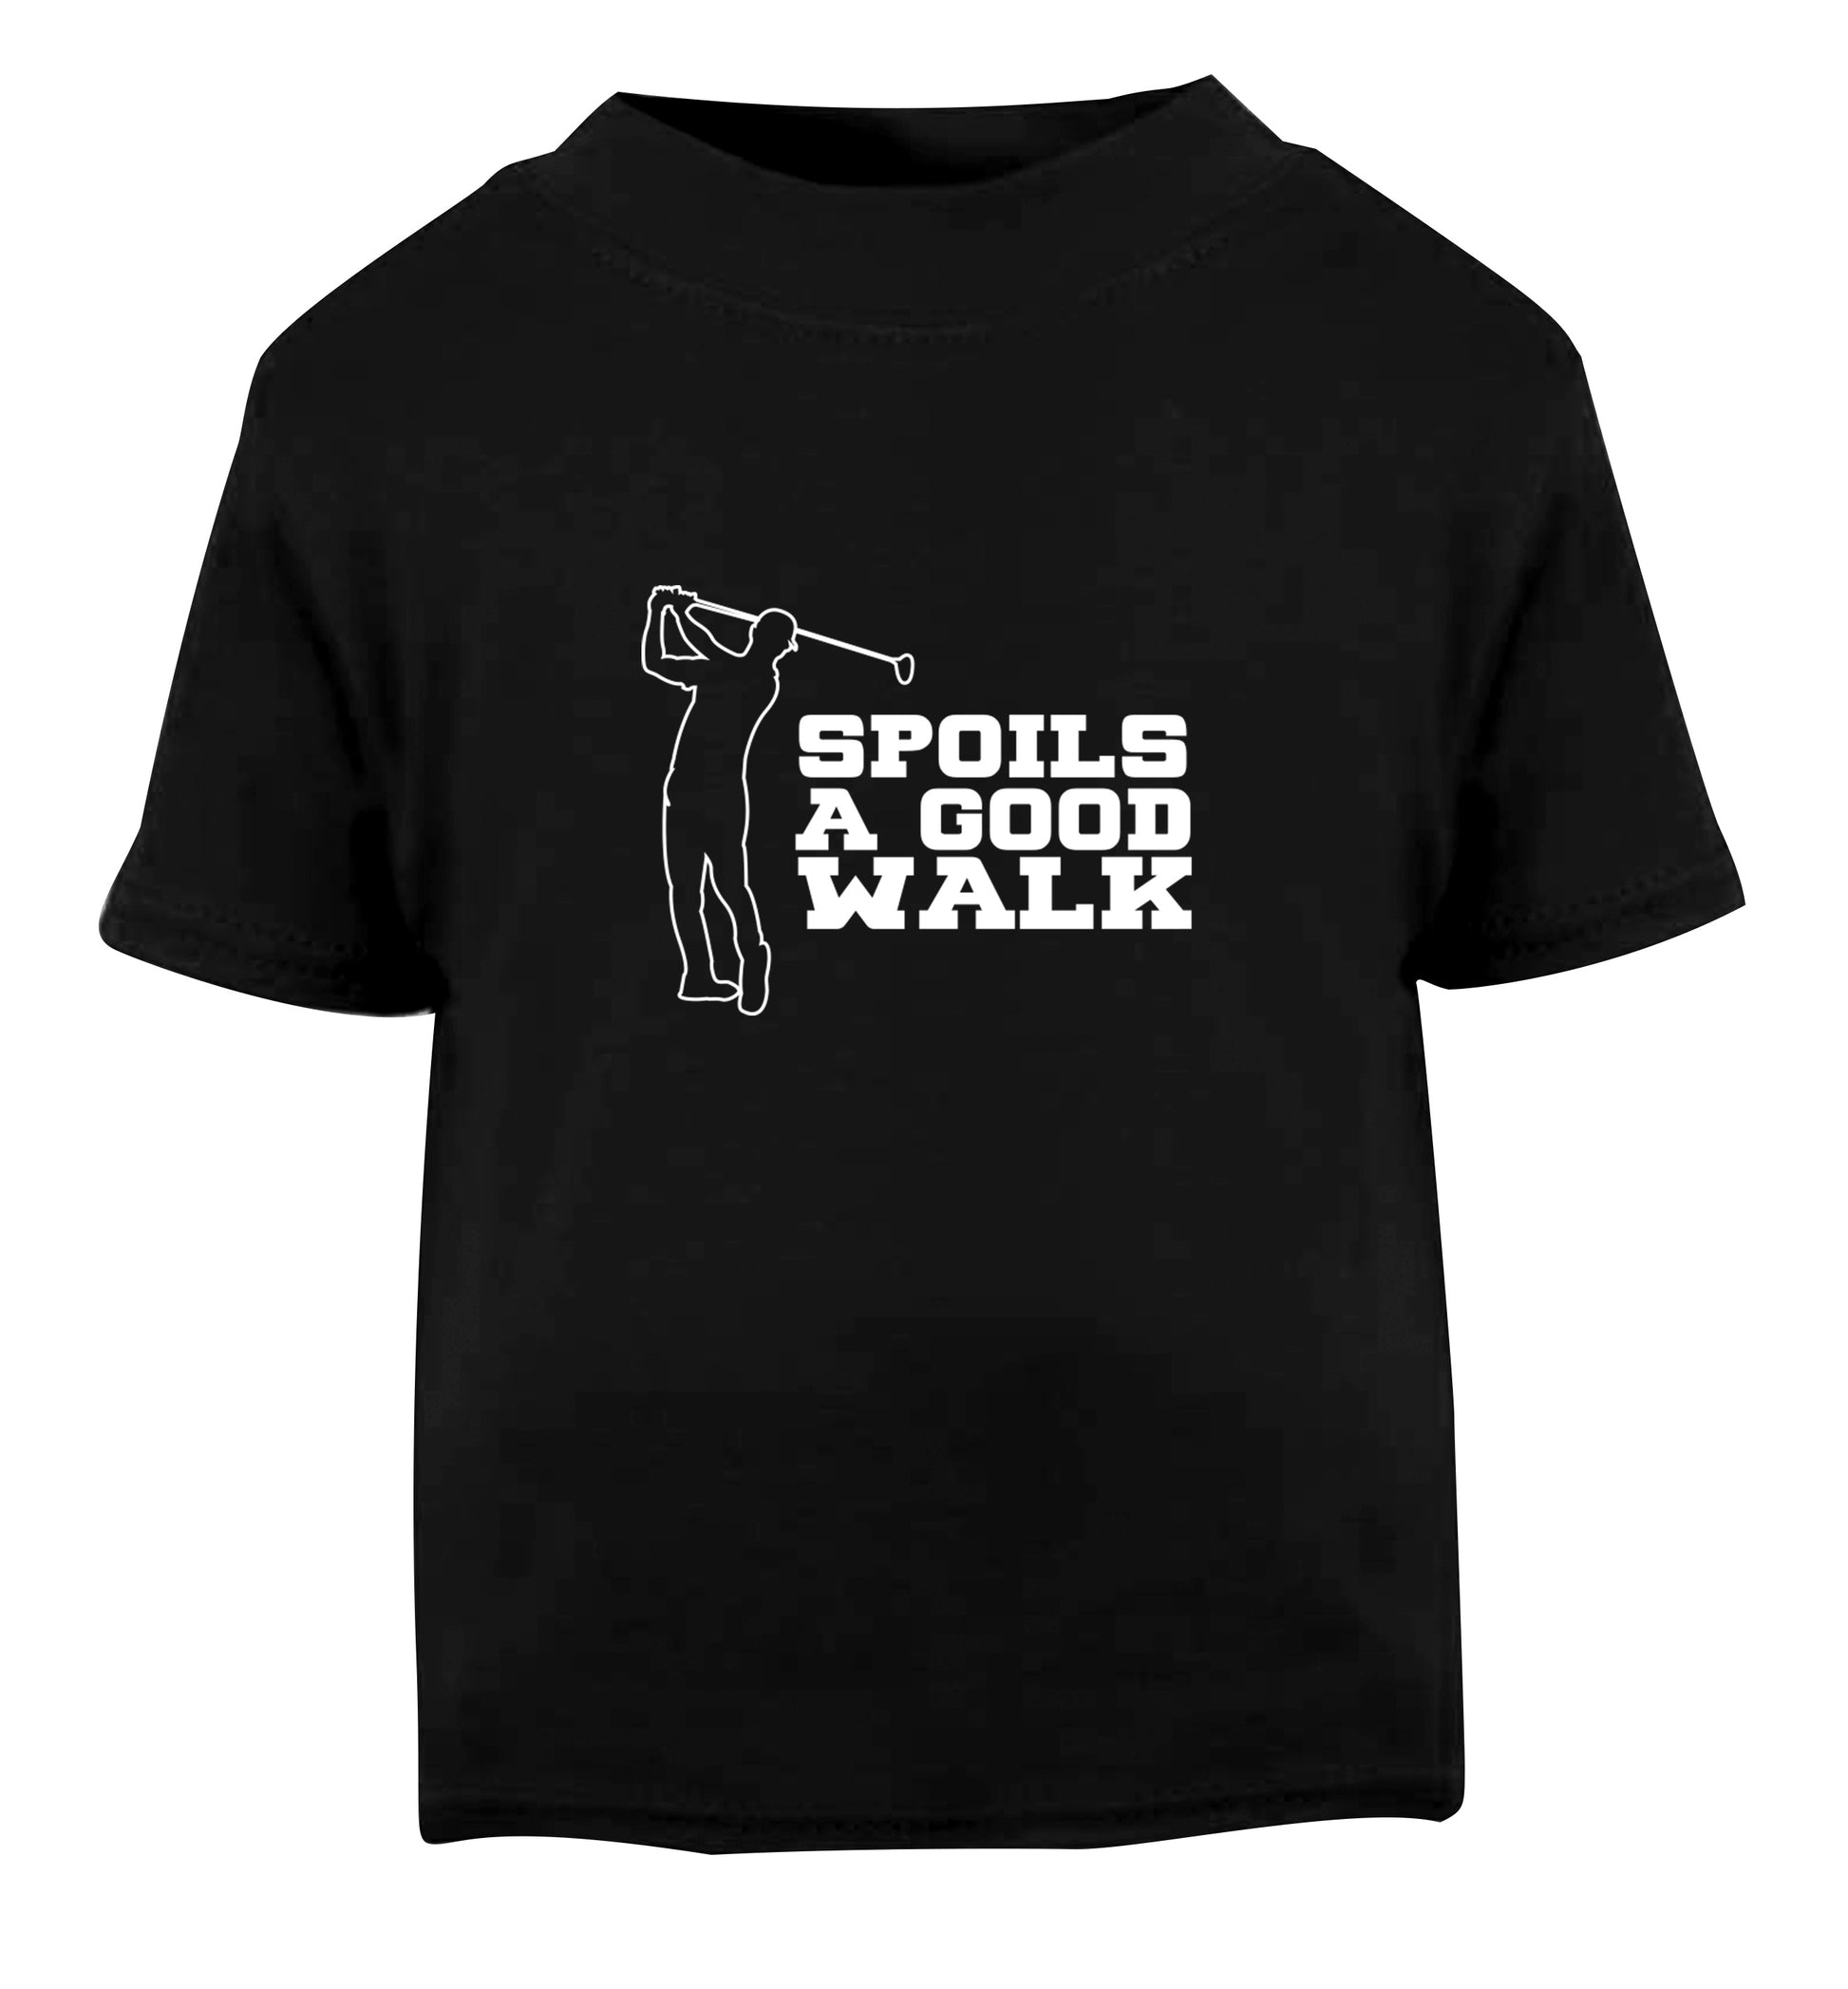 Golf spoils a good walk Black Baby Toddler Tshirt 2 years